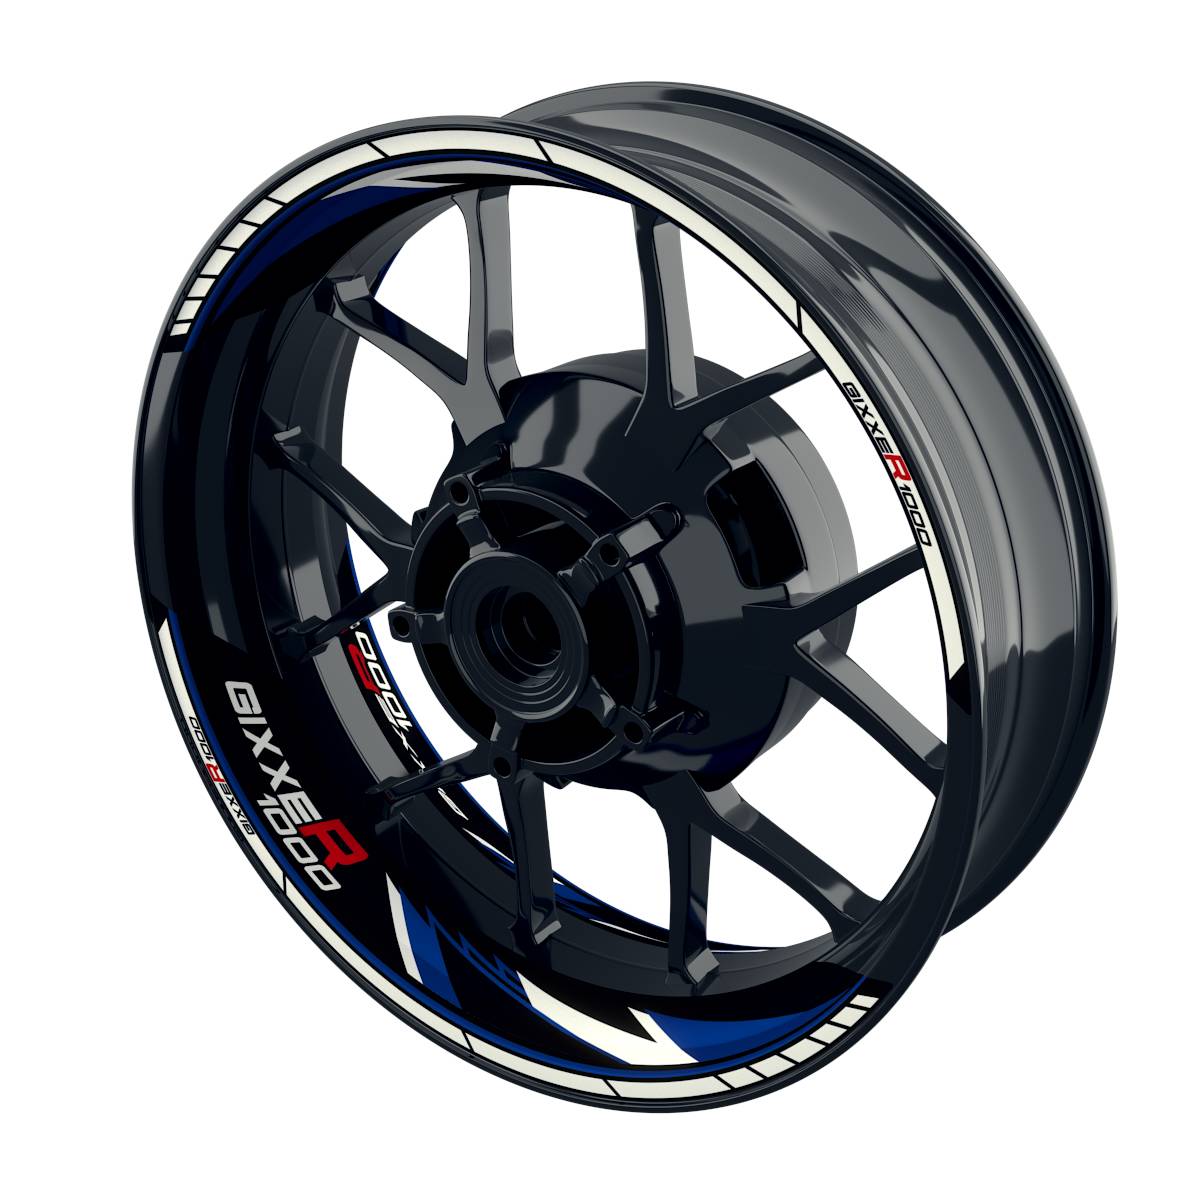 GIXXER 1000 Razor Rim Decals Wheelsticker Premium splitted